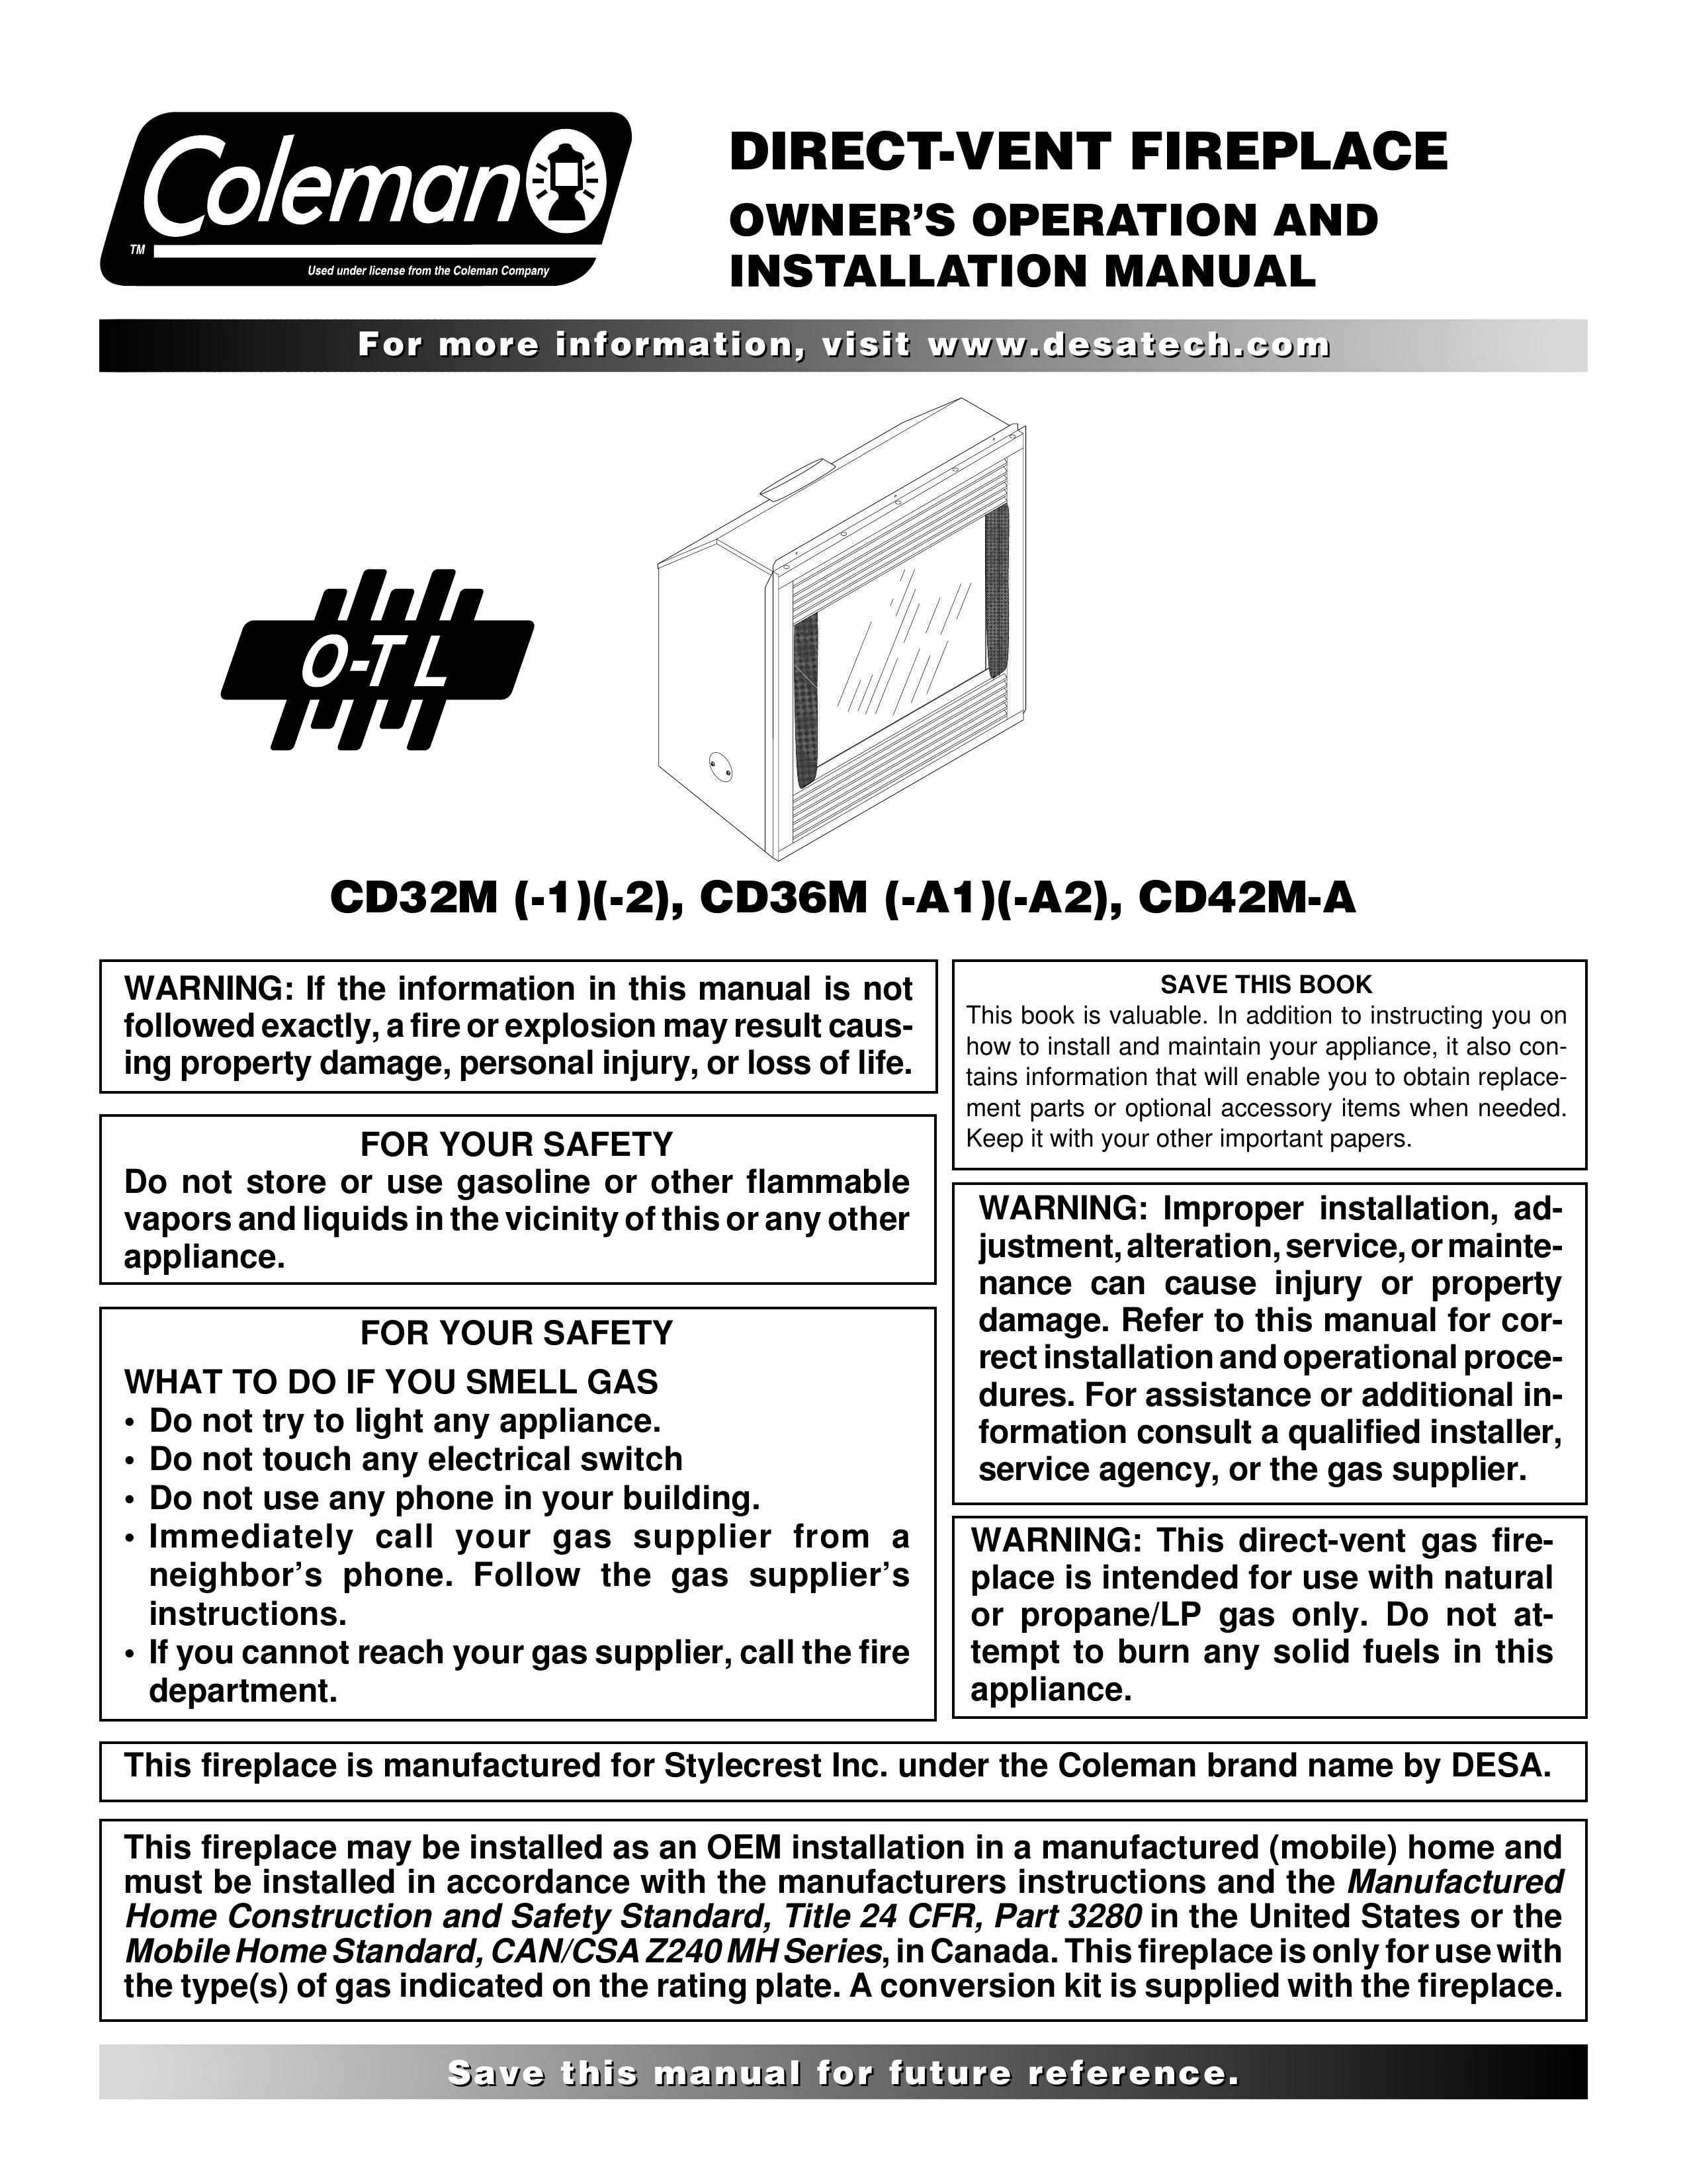 Desa CD42M-A Fire Pit User Manual